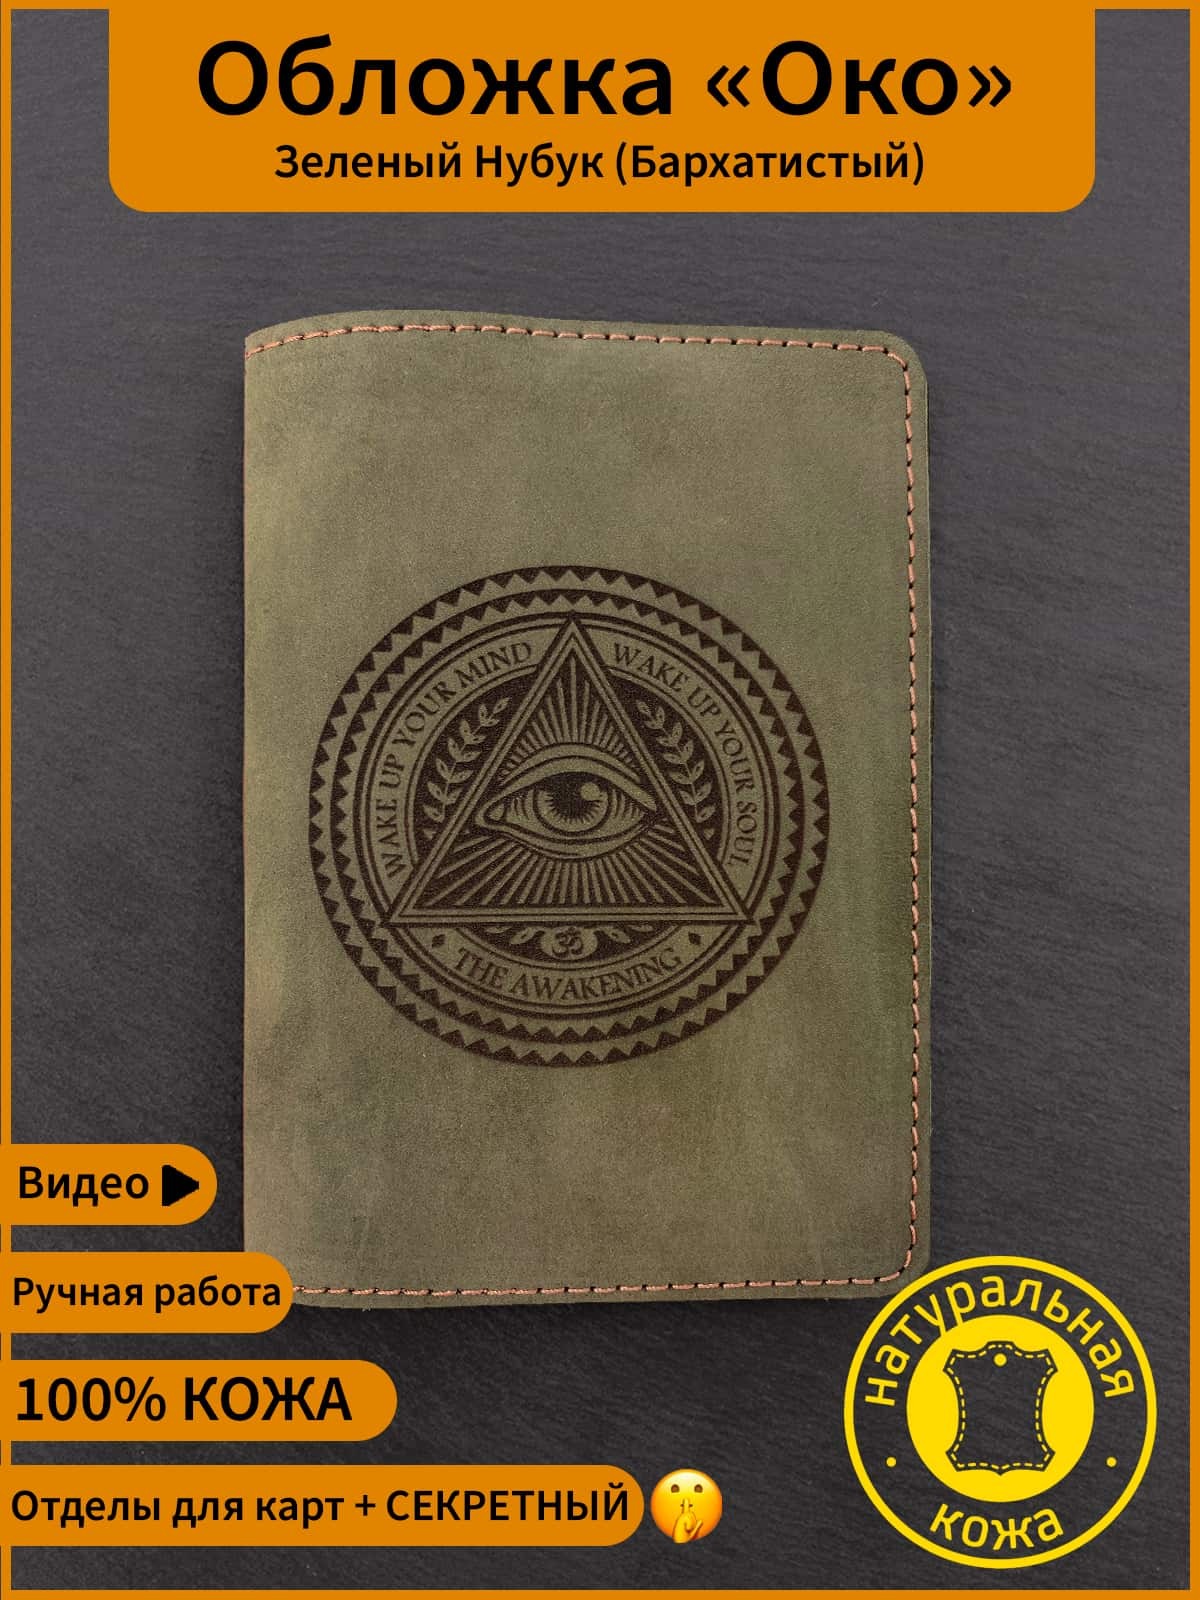 Обложка на паспорт РФ